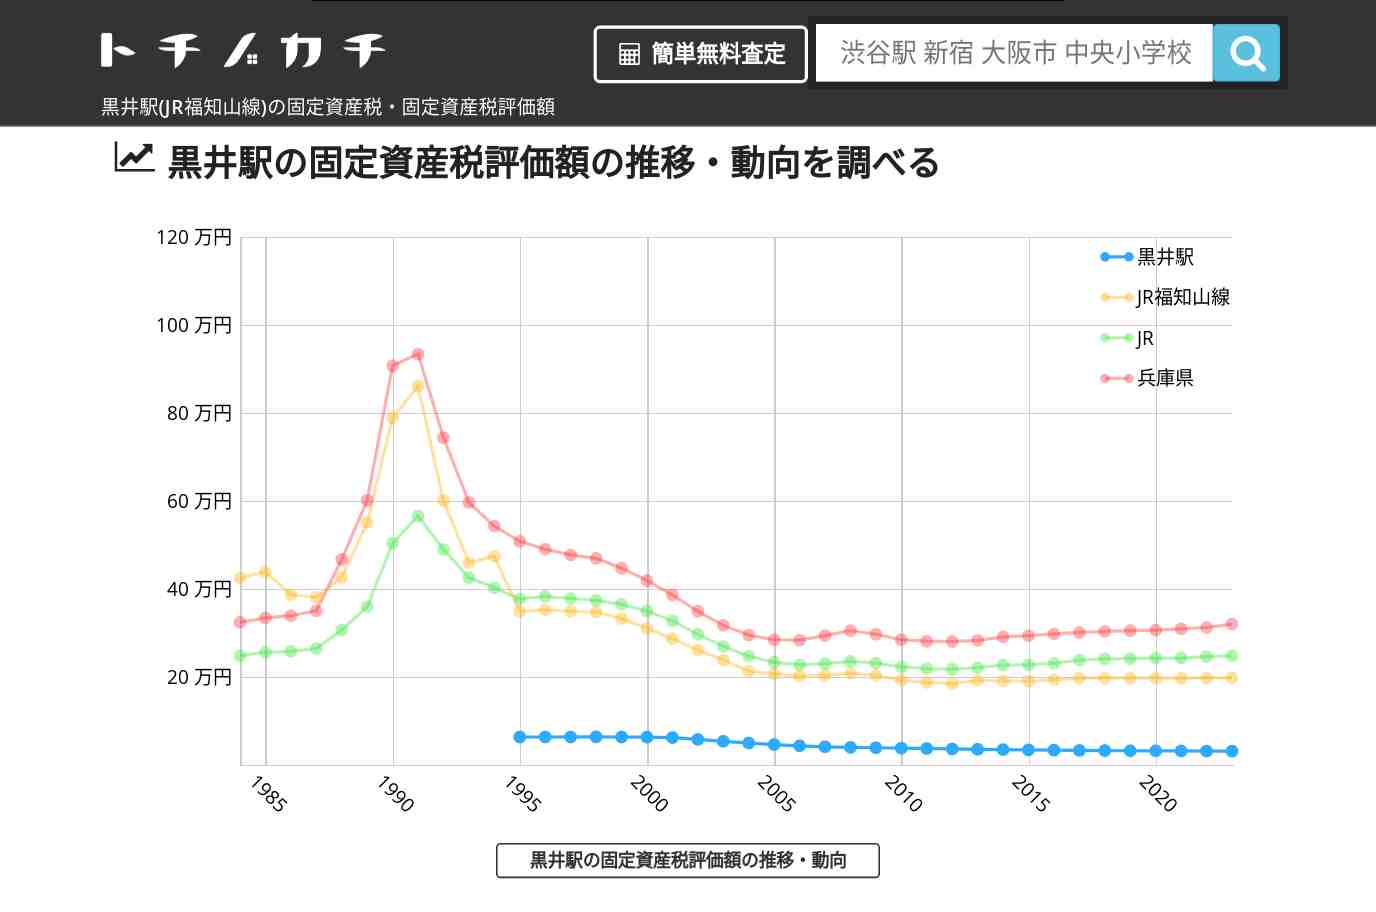 黒井駅(JR福知山線)の固定資産税・固定資産税評価額 | トチノカチ